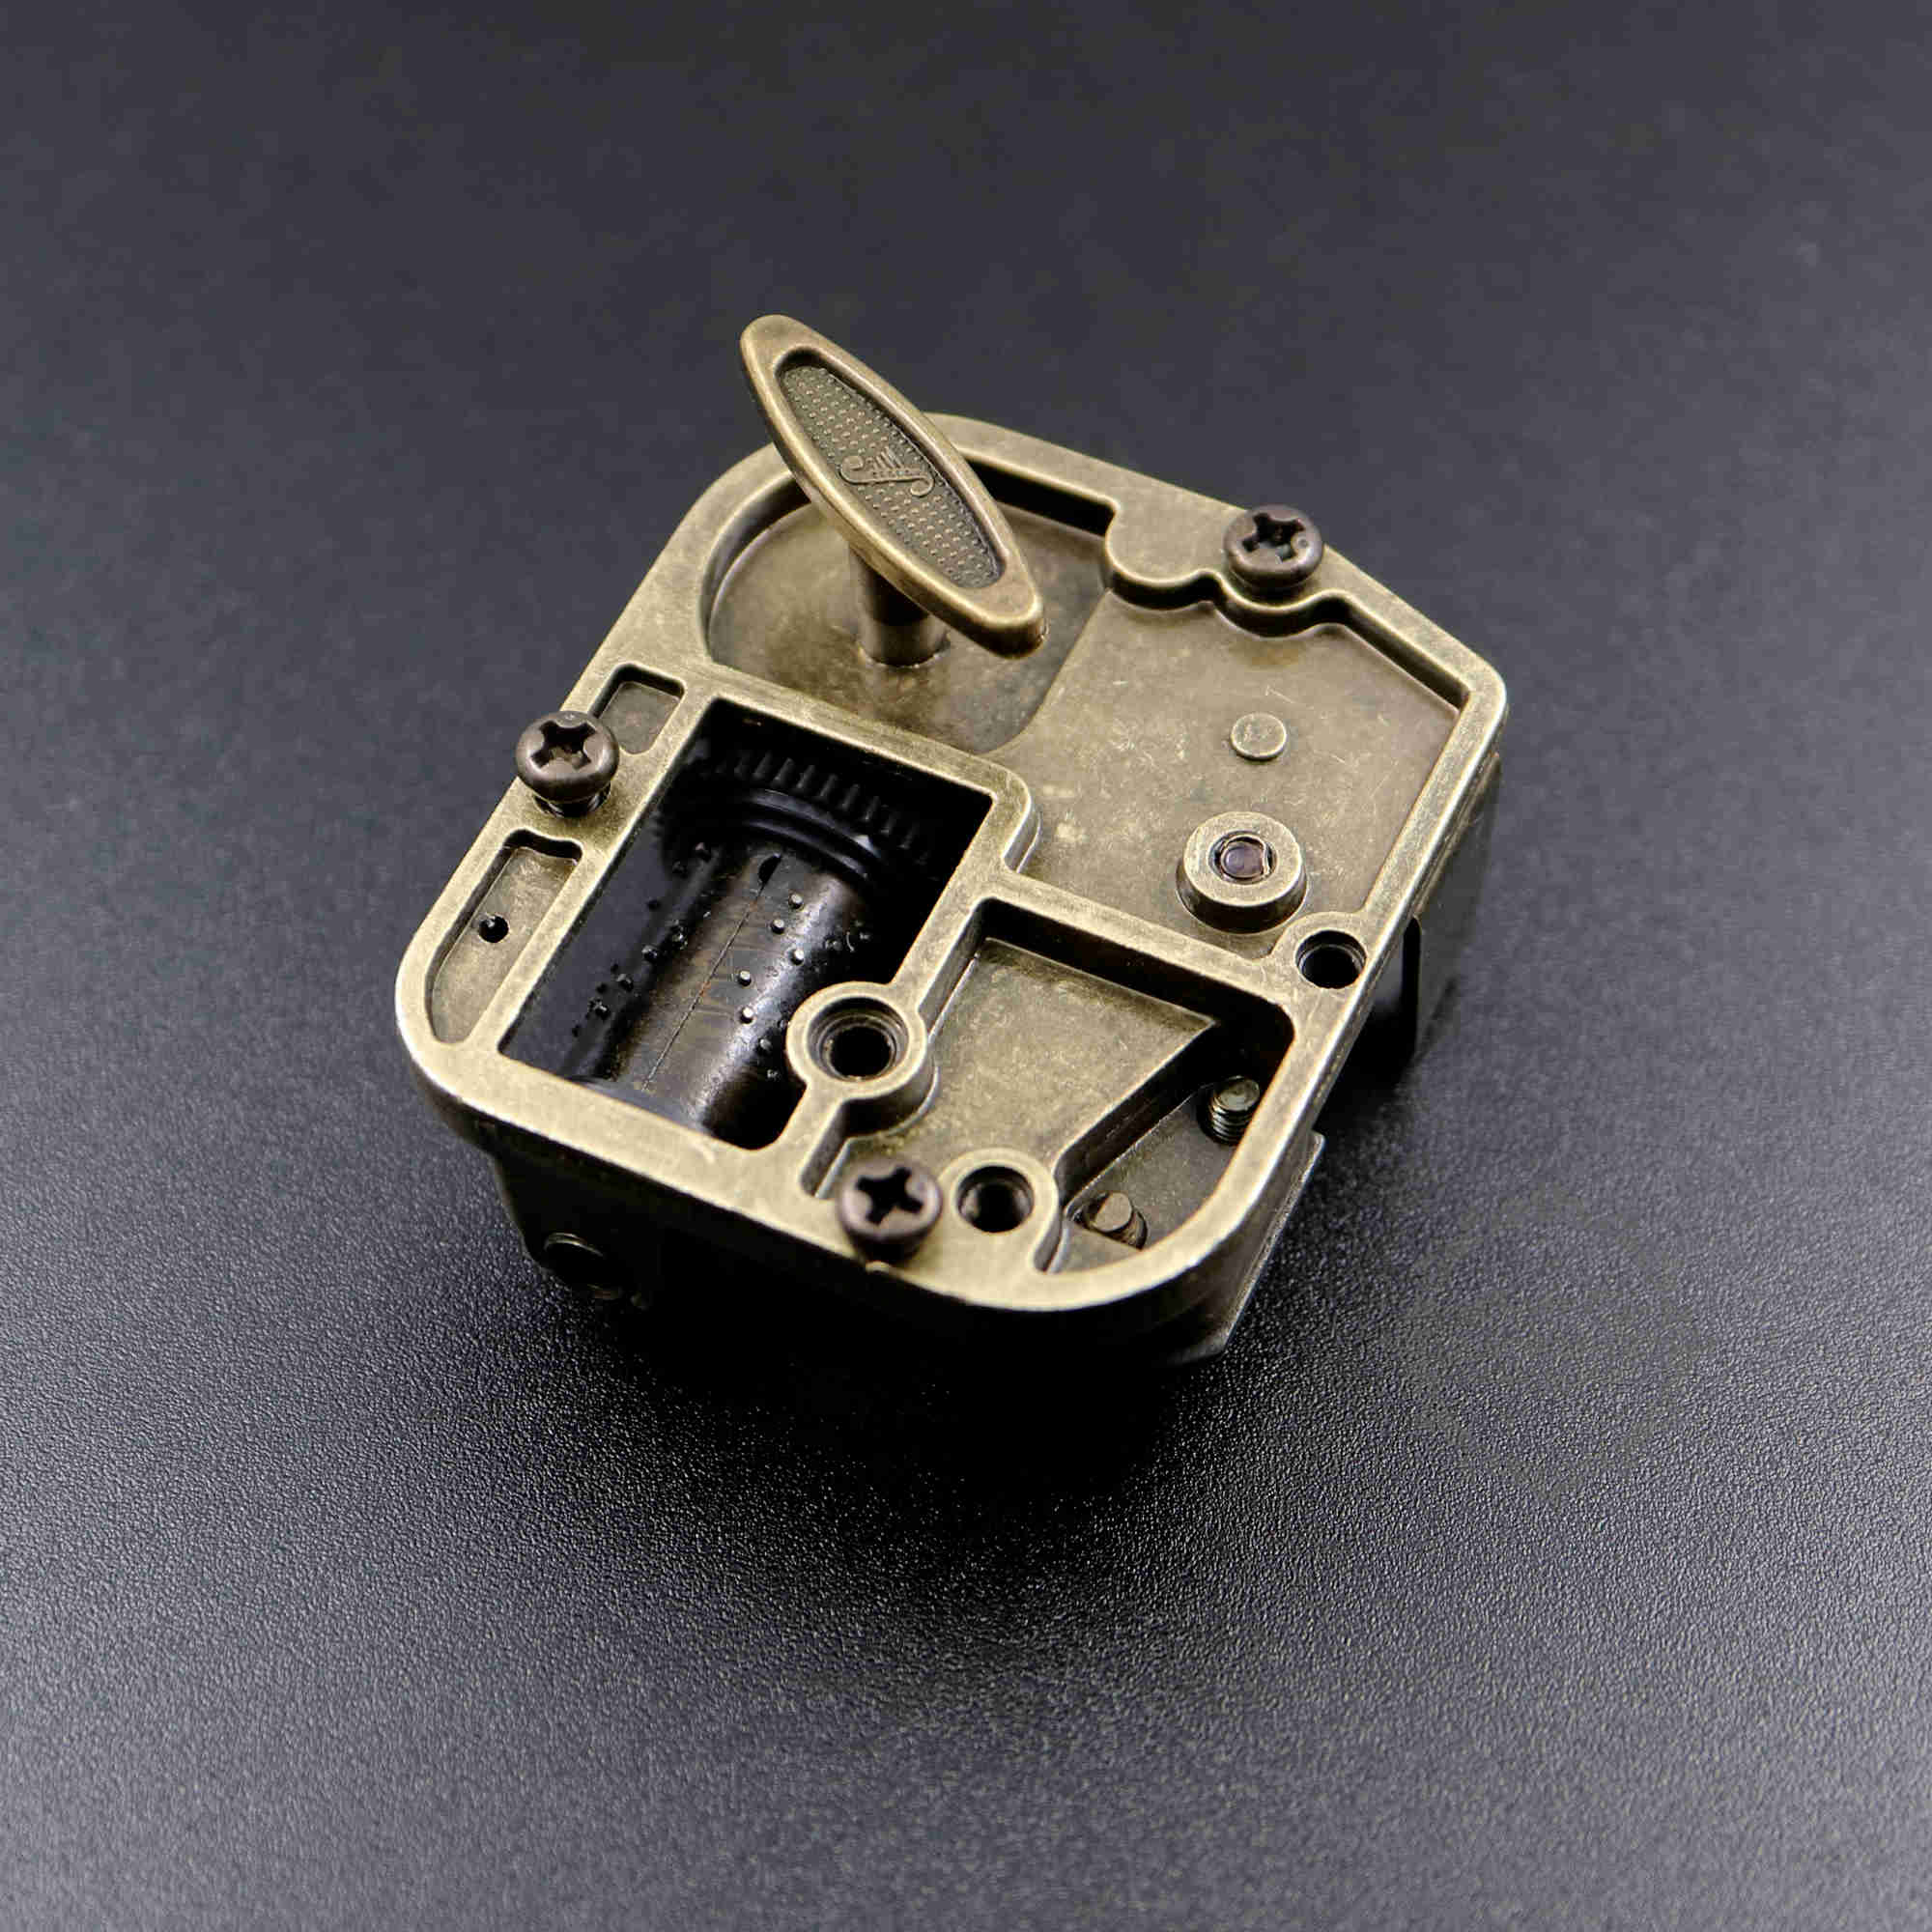 1pcs 50x45x20mm antiqued bronze mini DIY 18 tones music box movement toy gift craft supplies 1502065-1 - Click Image to Close